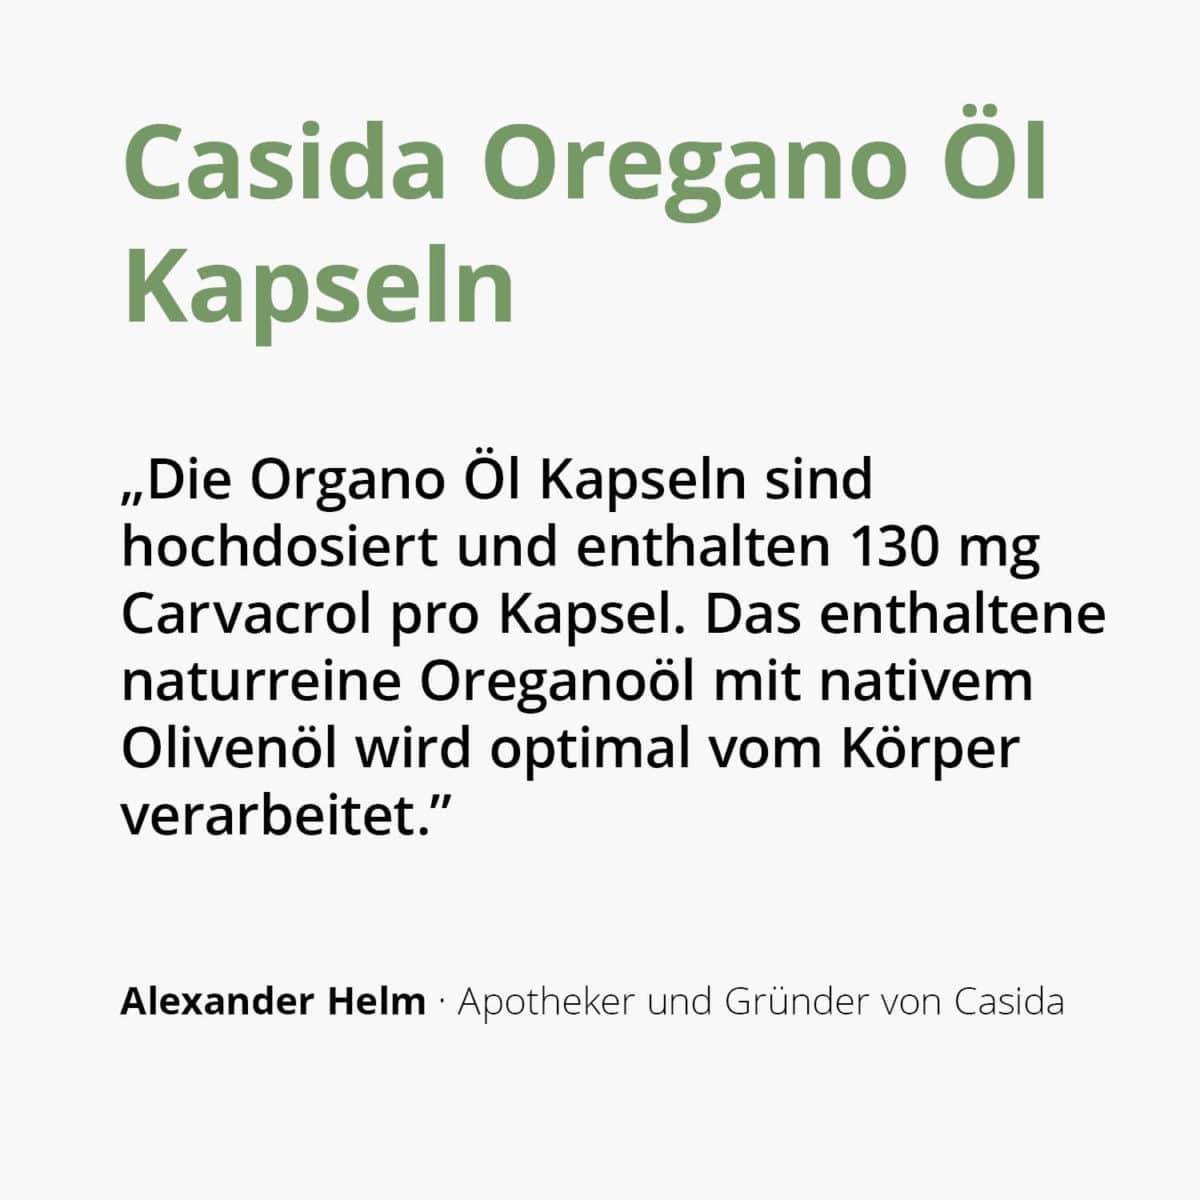 Casida Oregano Öl Kapseln Origanum vulgare ssp. Hirtum naturrein 10 ml PZN DE 18181321 PZN AT 56793212